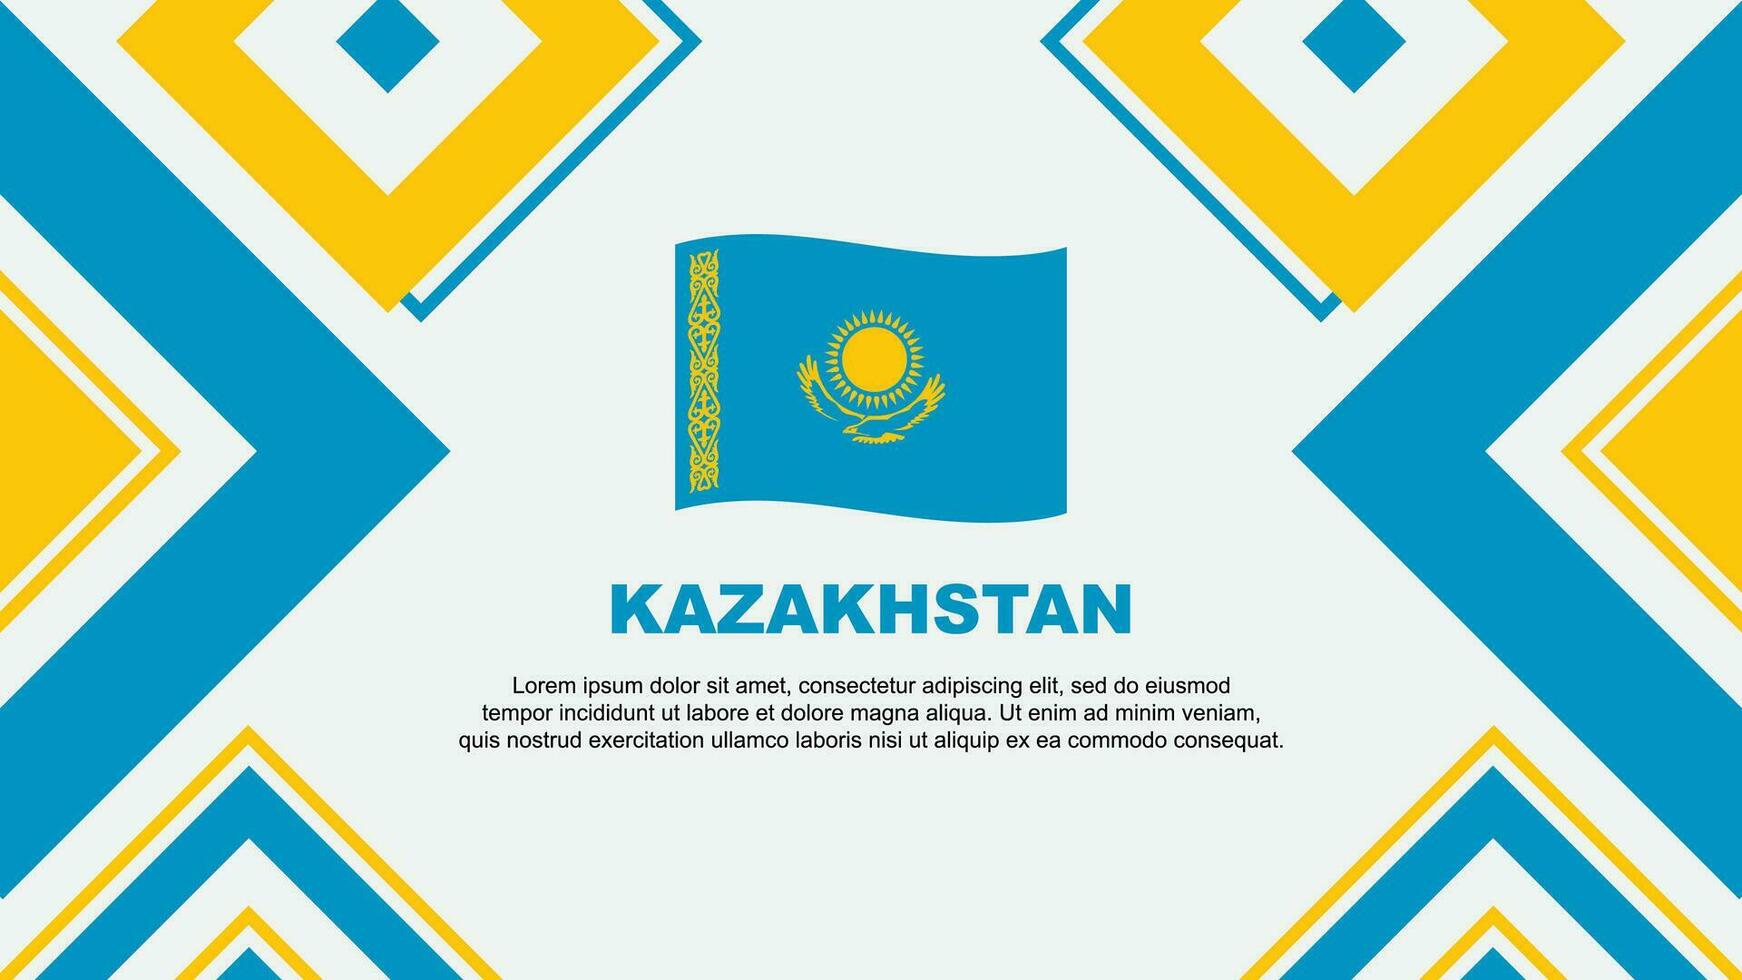 Kazakhstan Flag Abstract Background Design Template. Kazakhstan Independence Day Banner Wallpaper Vector Illustration. Kazakhstan Independence Day